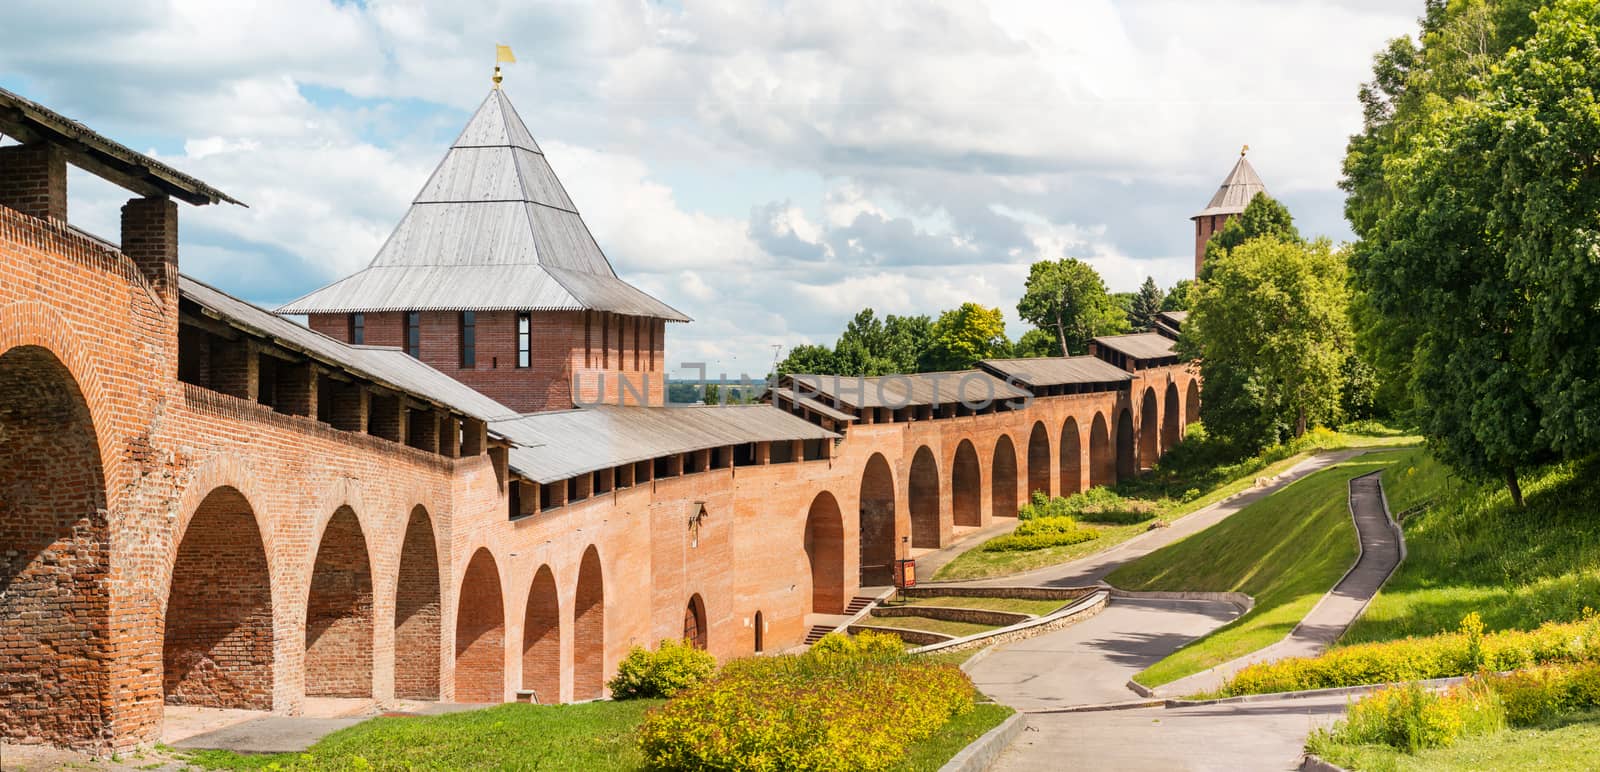 Middle ages fortress Kremlin in Nizhniy Novgorod by fascinadora